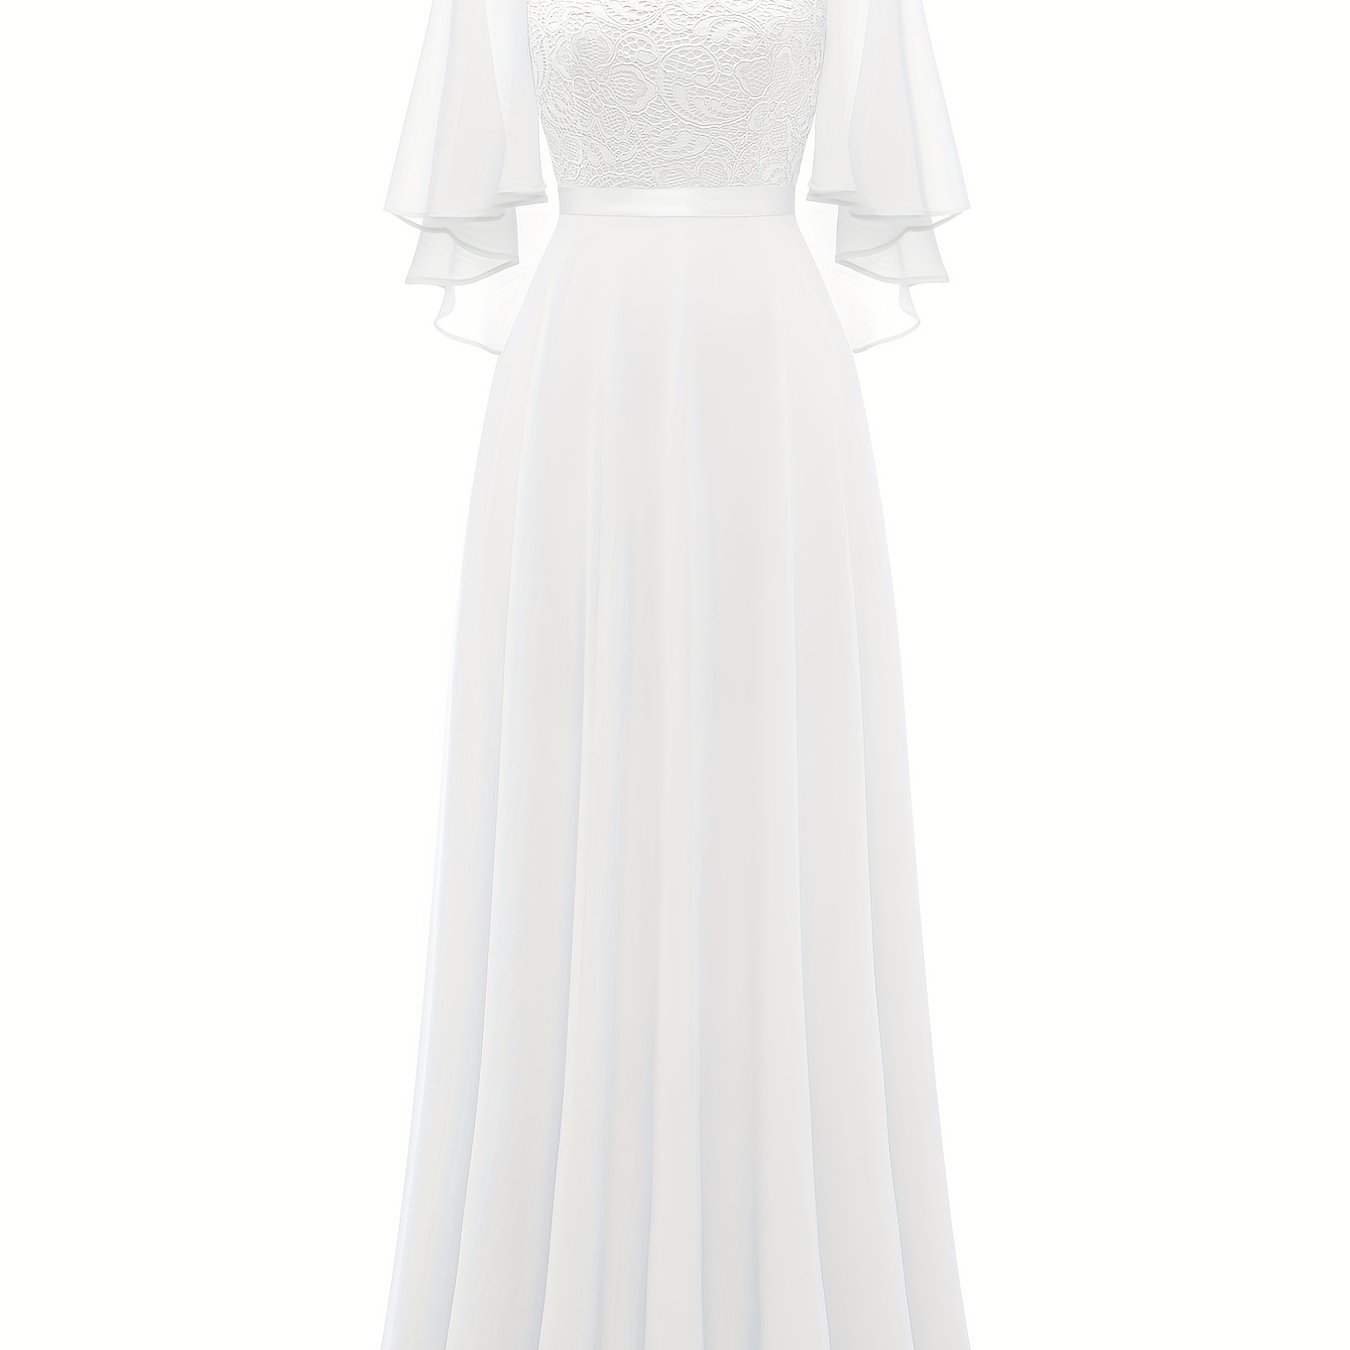 SENGPA Timeless Solid Lace Aline Bridesmaid Dress - Chic Crew Neckline, Flattering Wedding Party Gown - Premium Womens Fashion